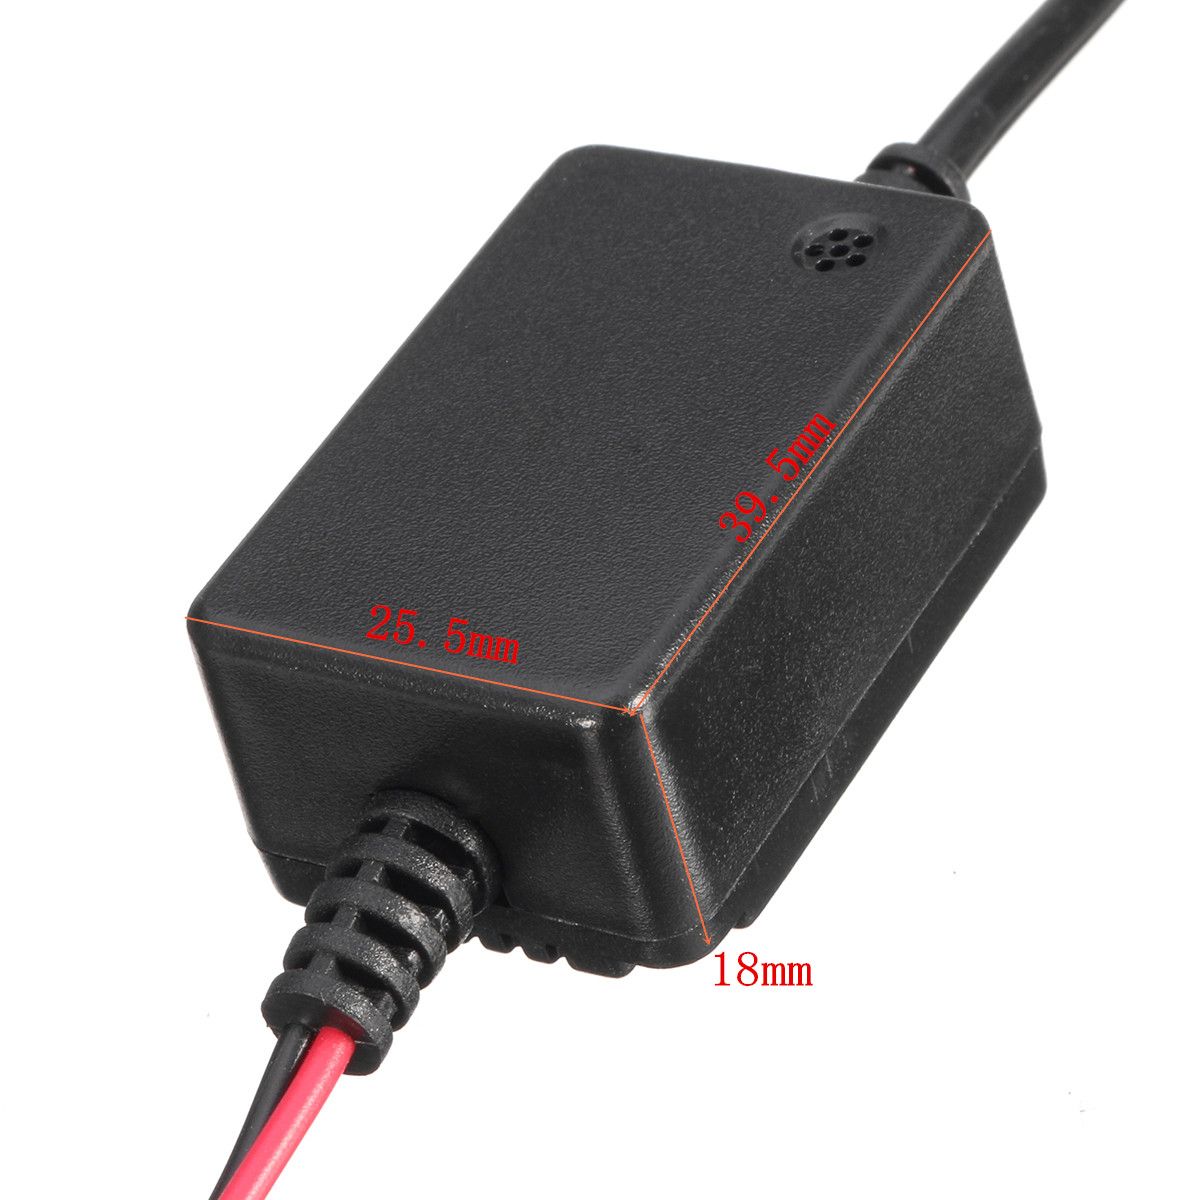 Car-Dash-Camera-Cam-Hard-Wire-Kit-Micro-USB-For-Nextbase-101-112-Mini-23-G1w-1180465